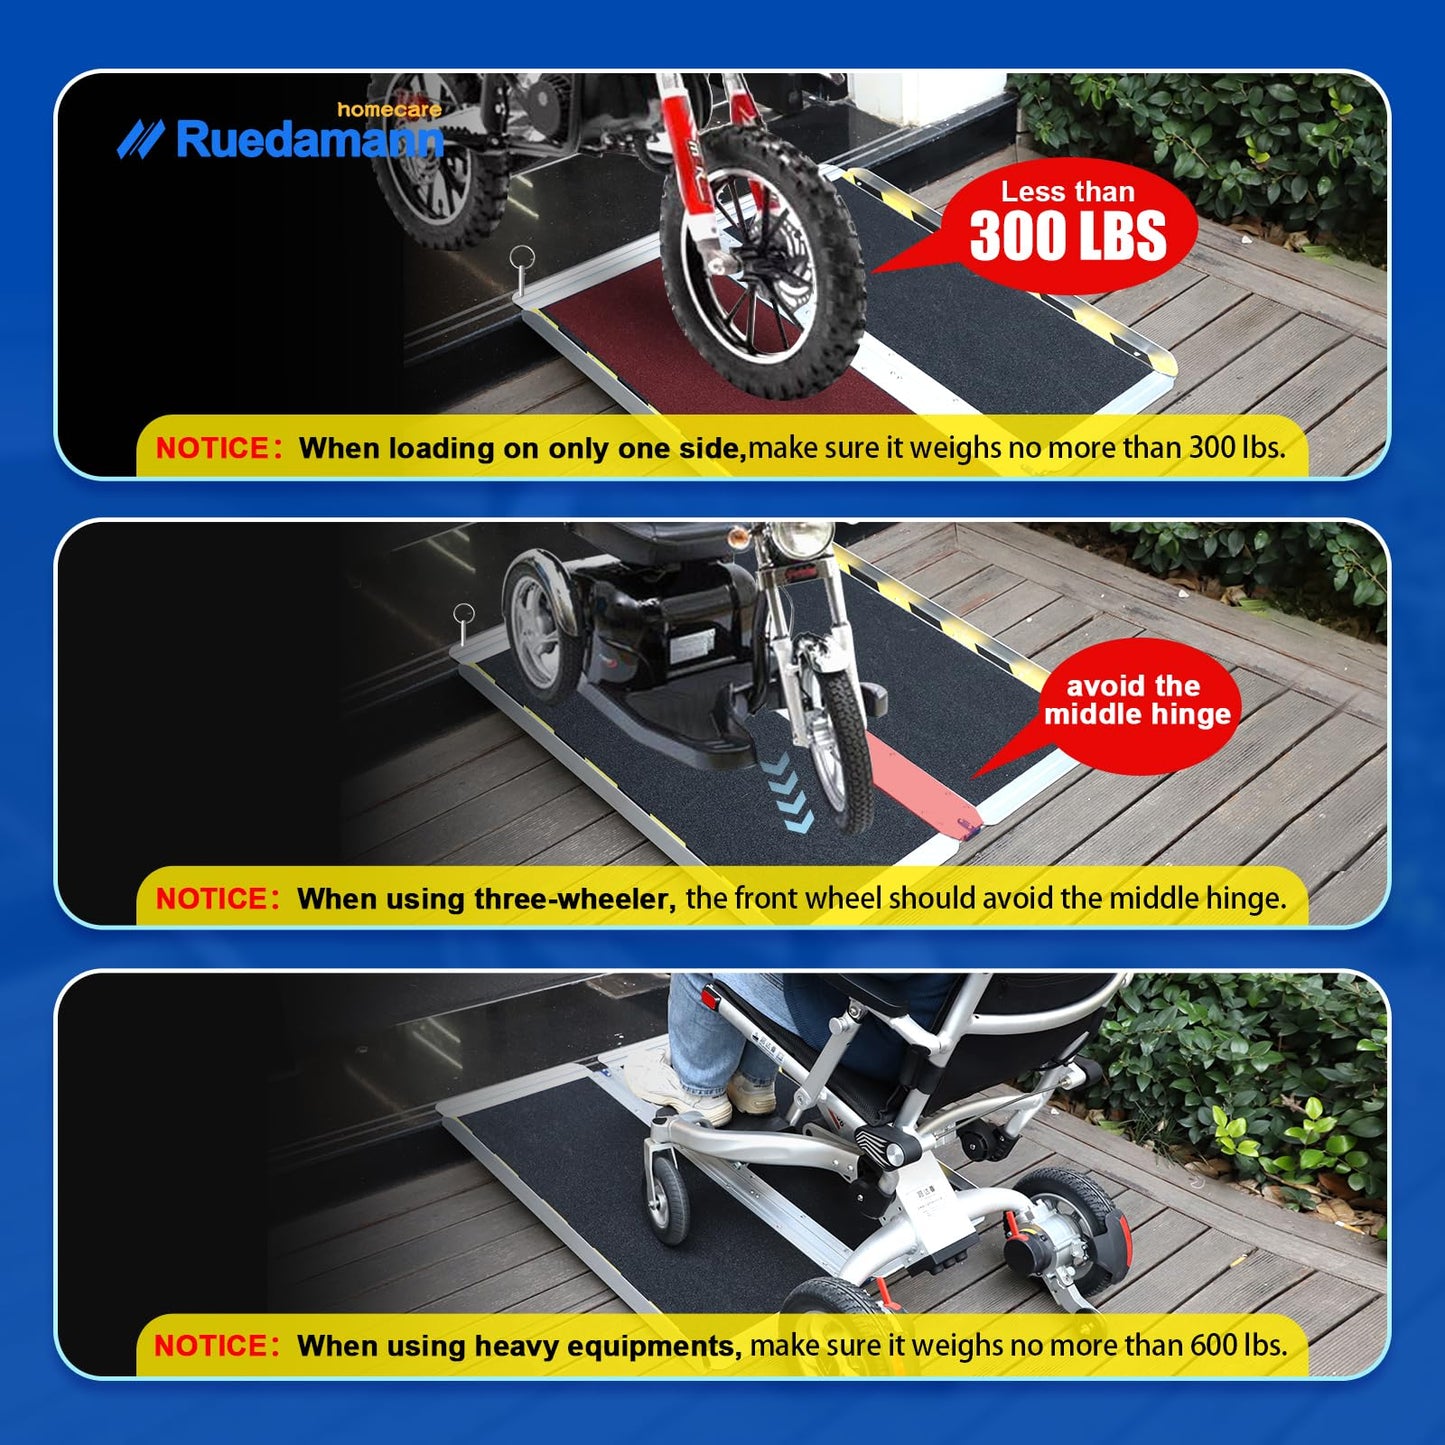 Ruedamann® 30.3"W Non-Skid Threshold Ramp Folding Aluminum Wheelchair Ramp